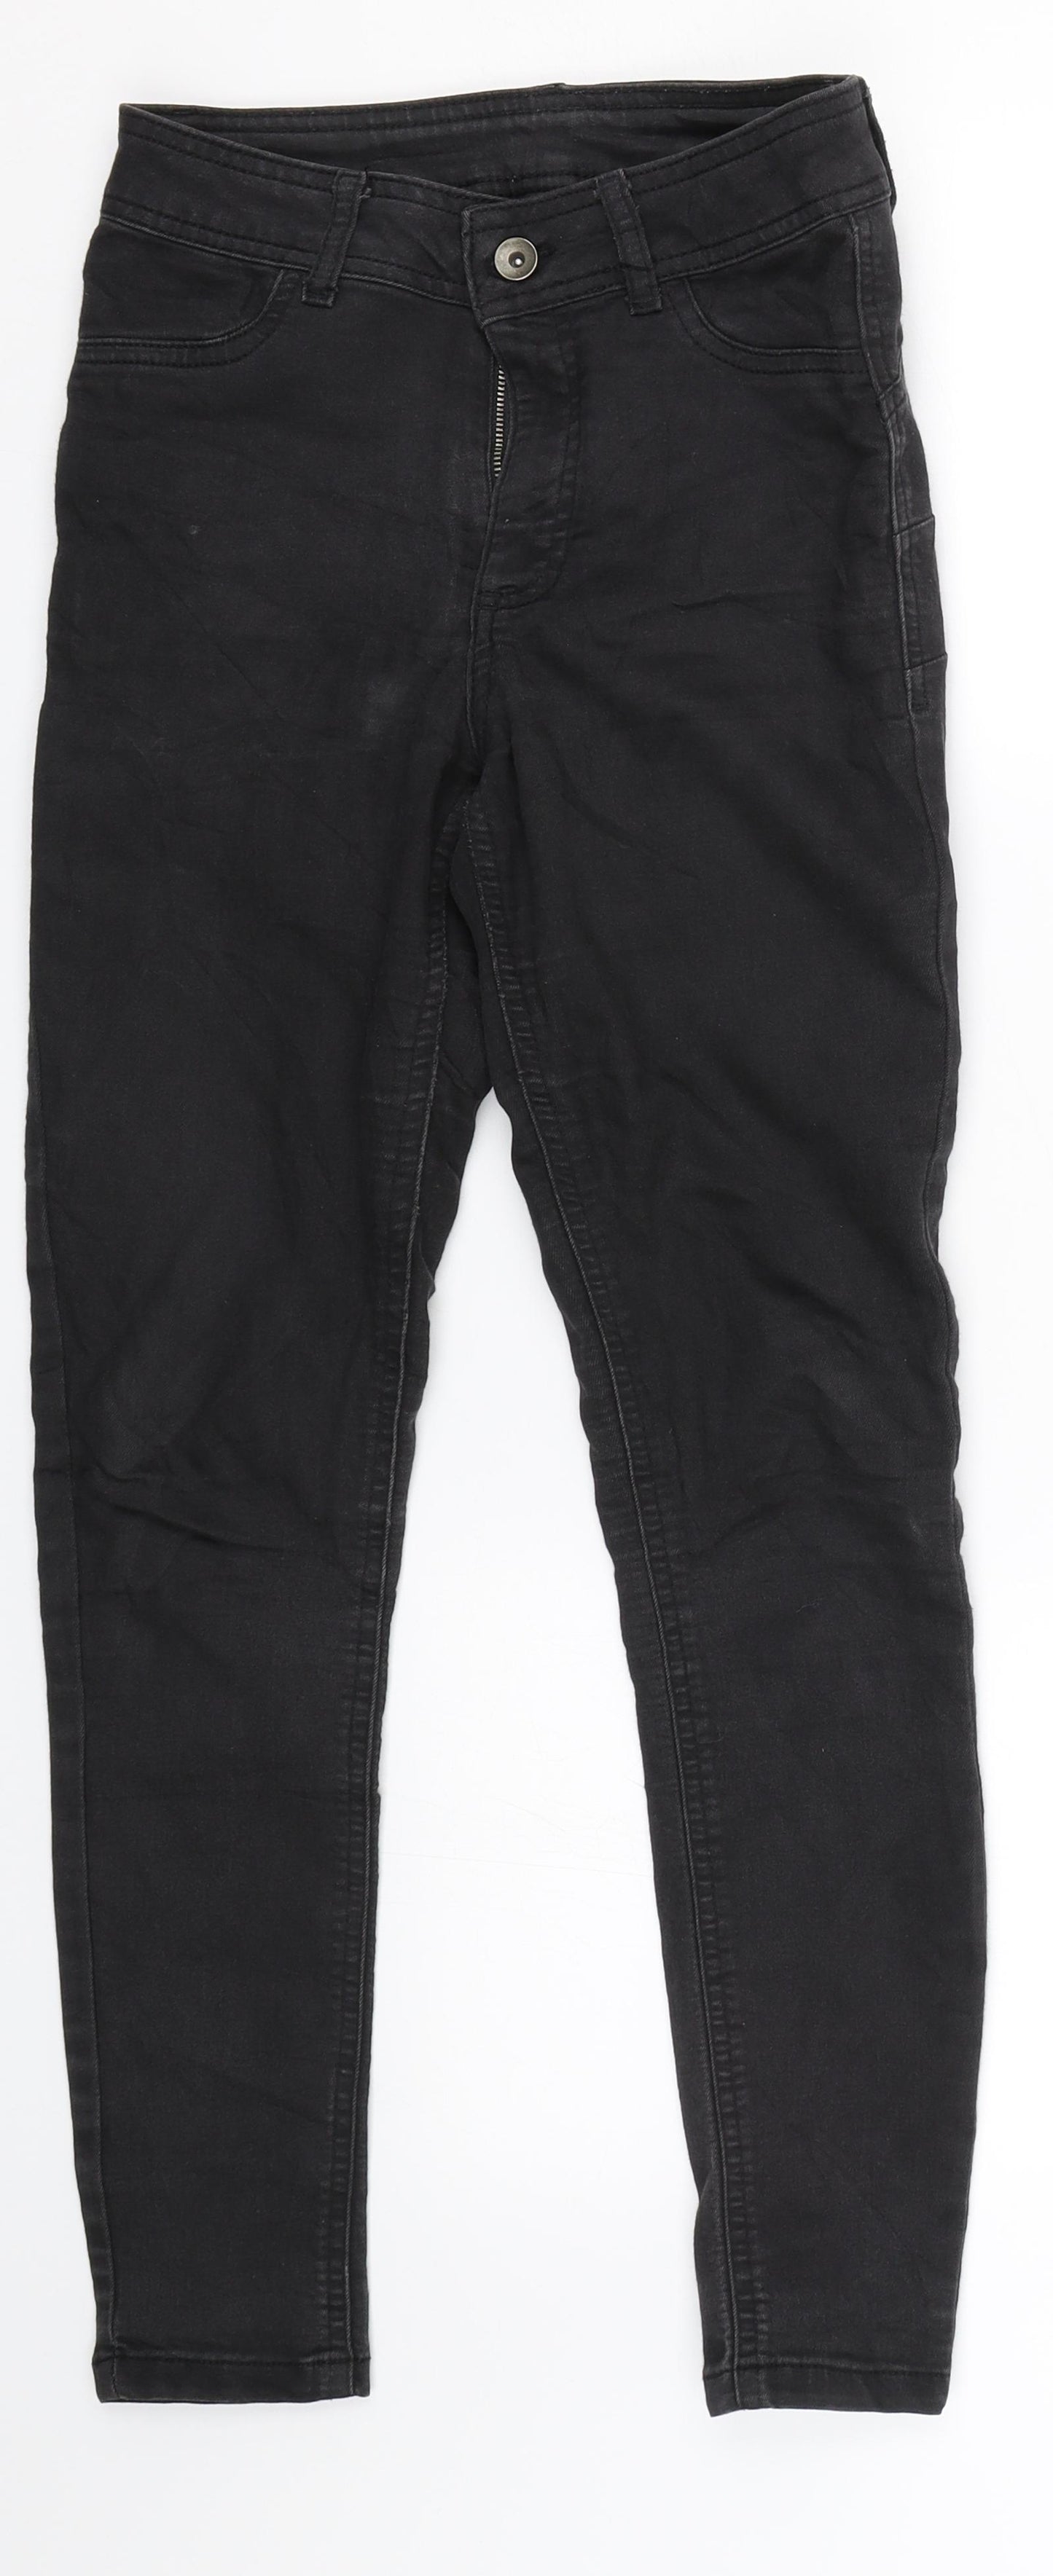 Calzedonia Womens Black  Denim Skinny Jeans Size 24 L24.5 in